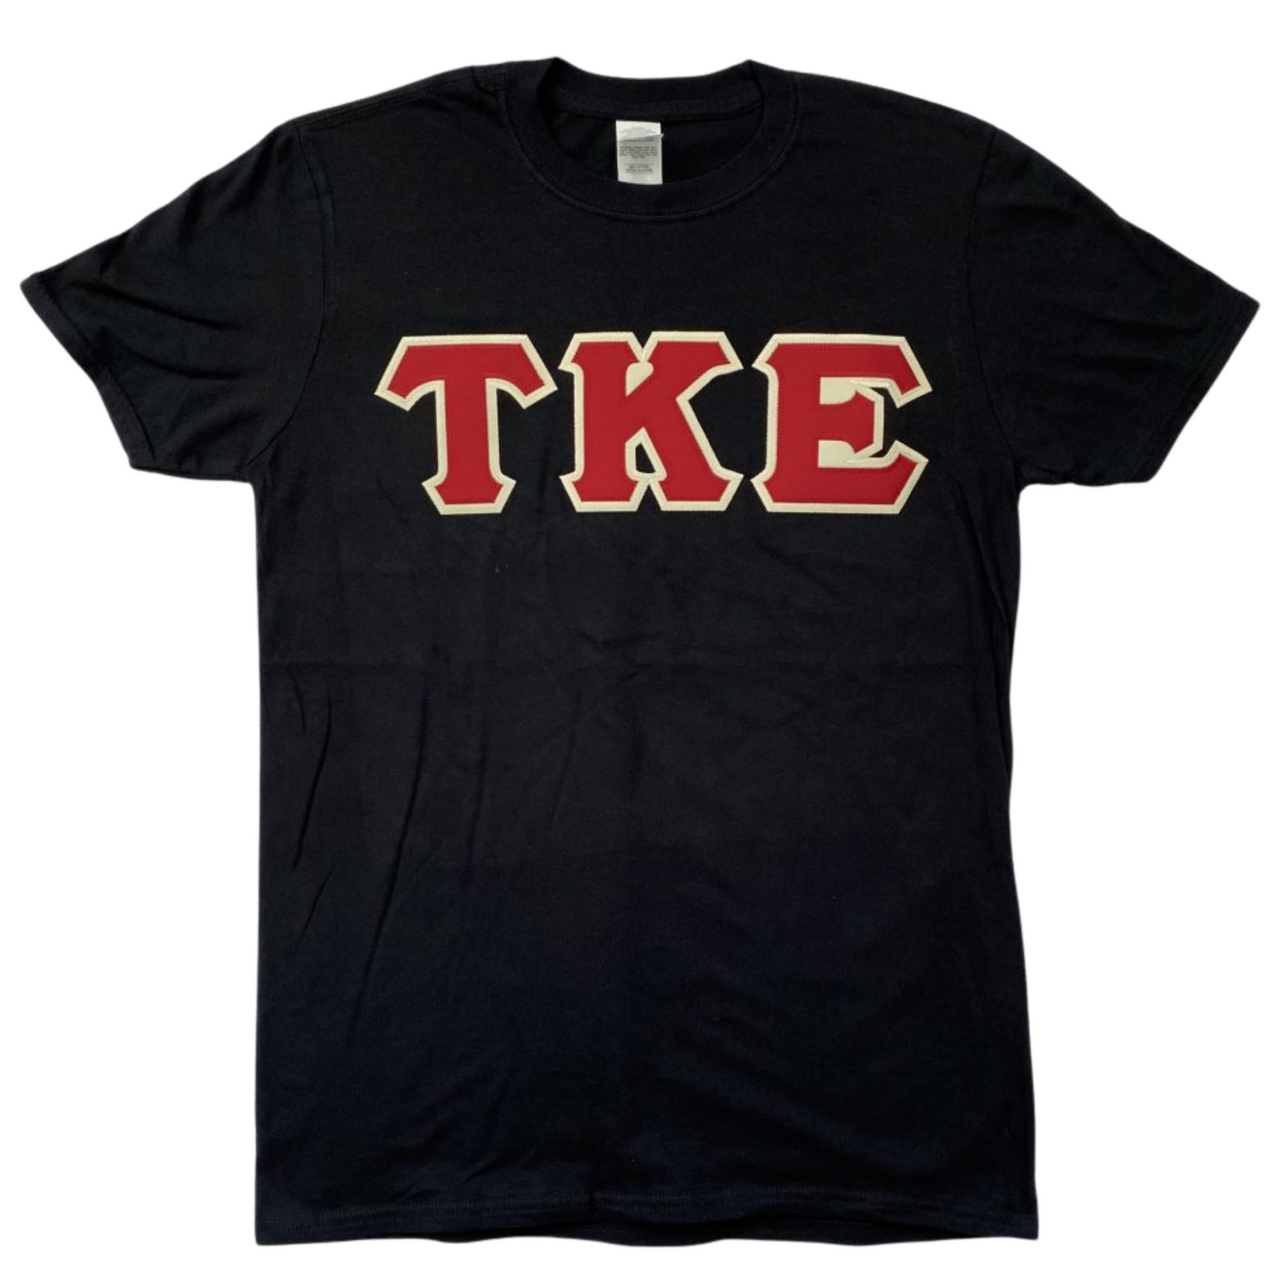 Tau Kappa Epsilon Stitched Letter T-Shirt | Black | Burgundy with Cream Border